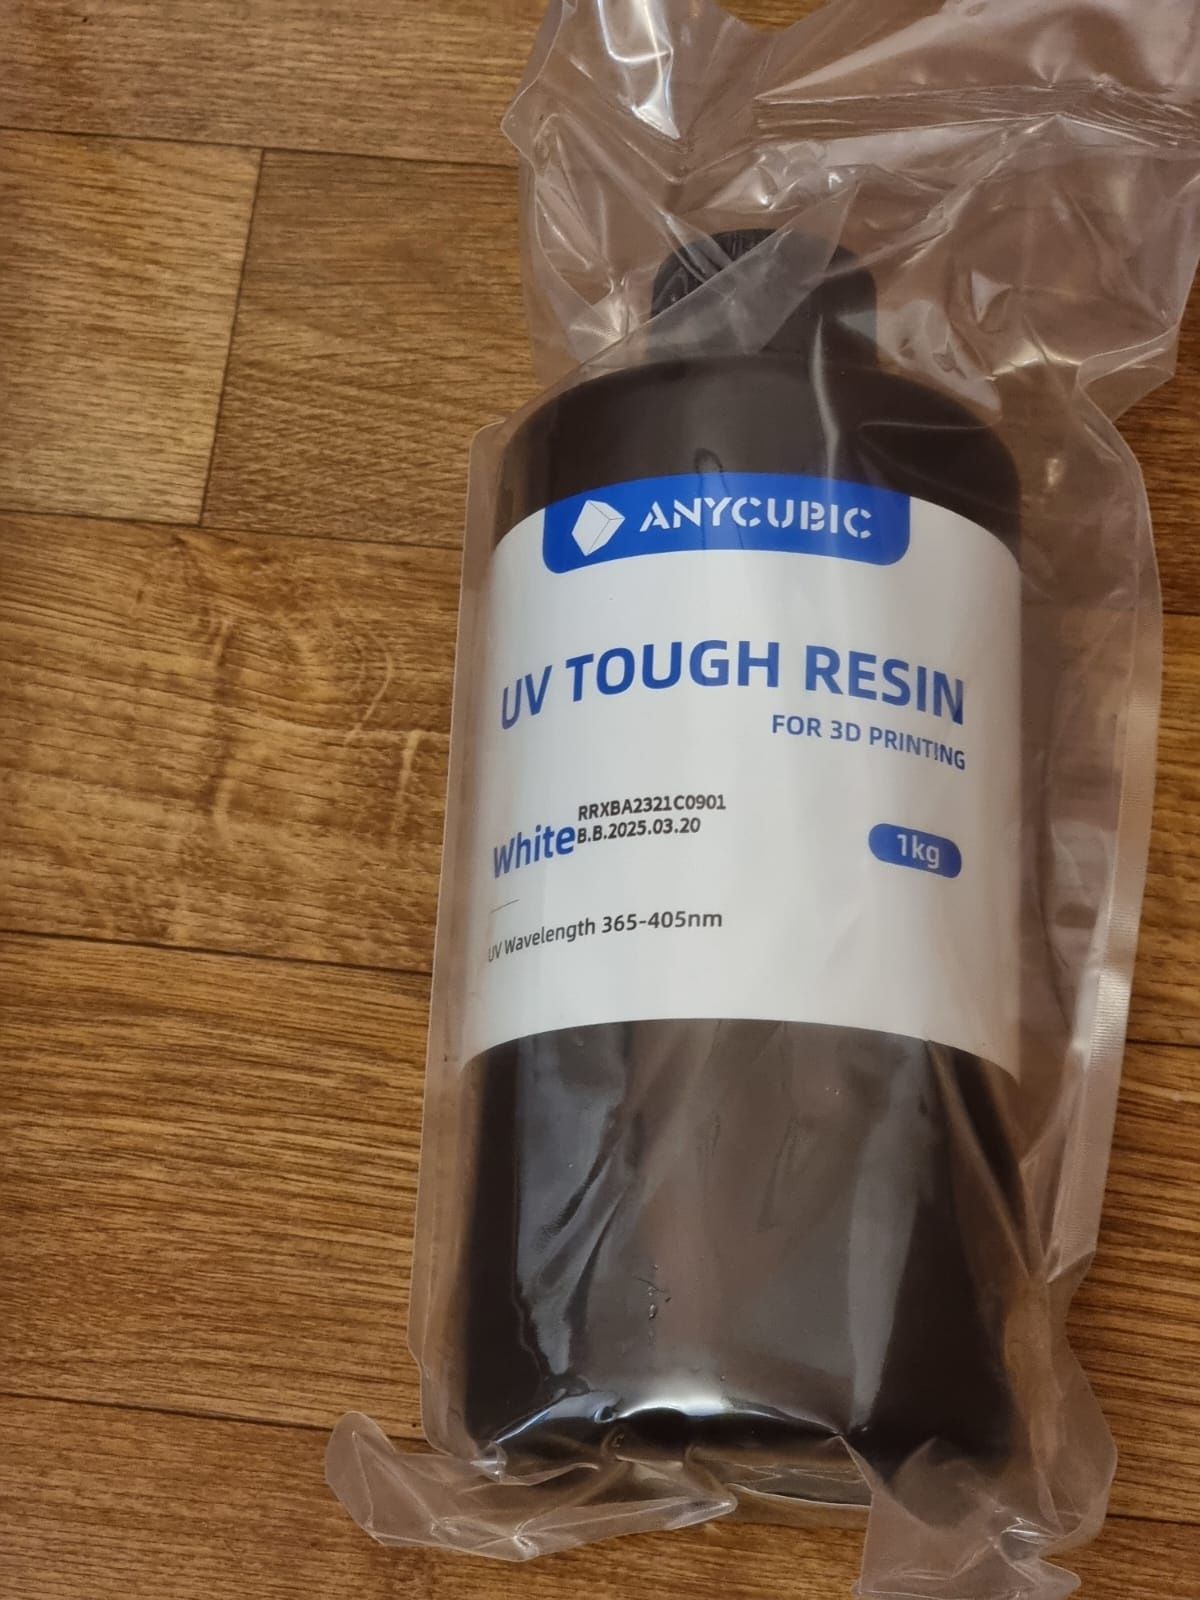 Uv tough resin - anycubic